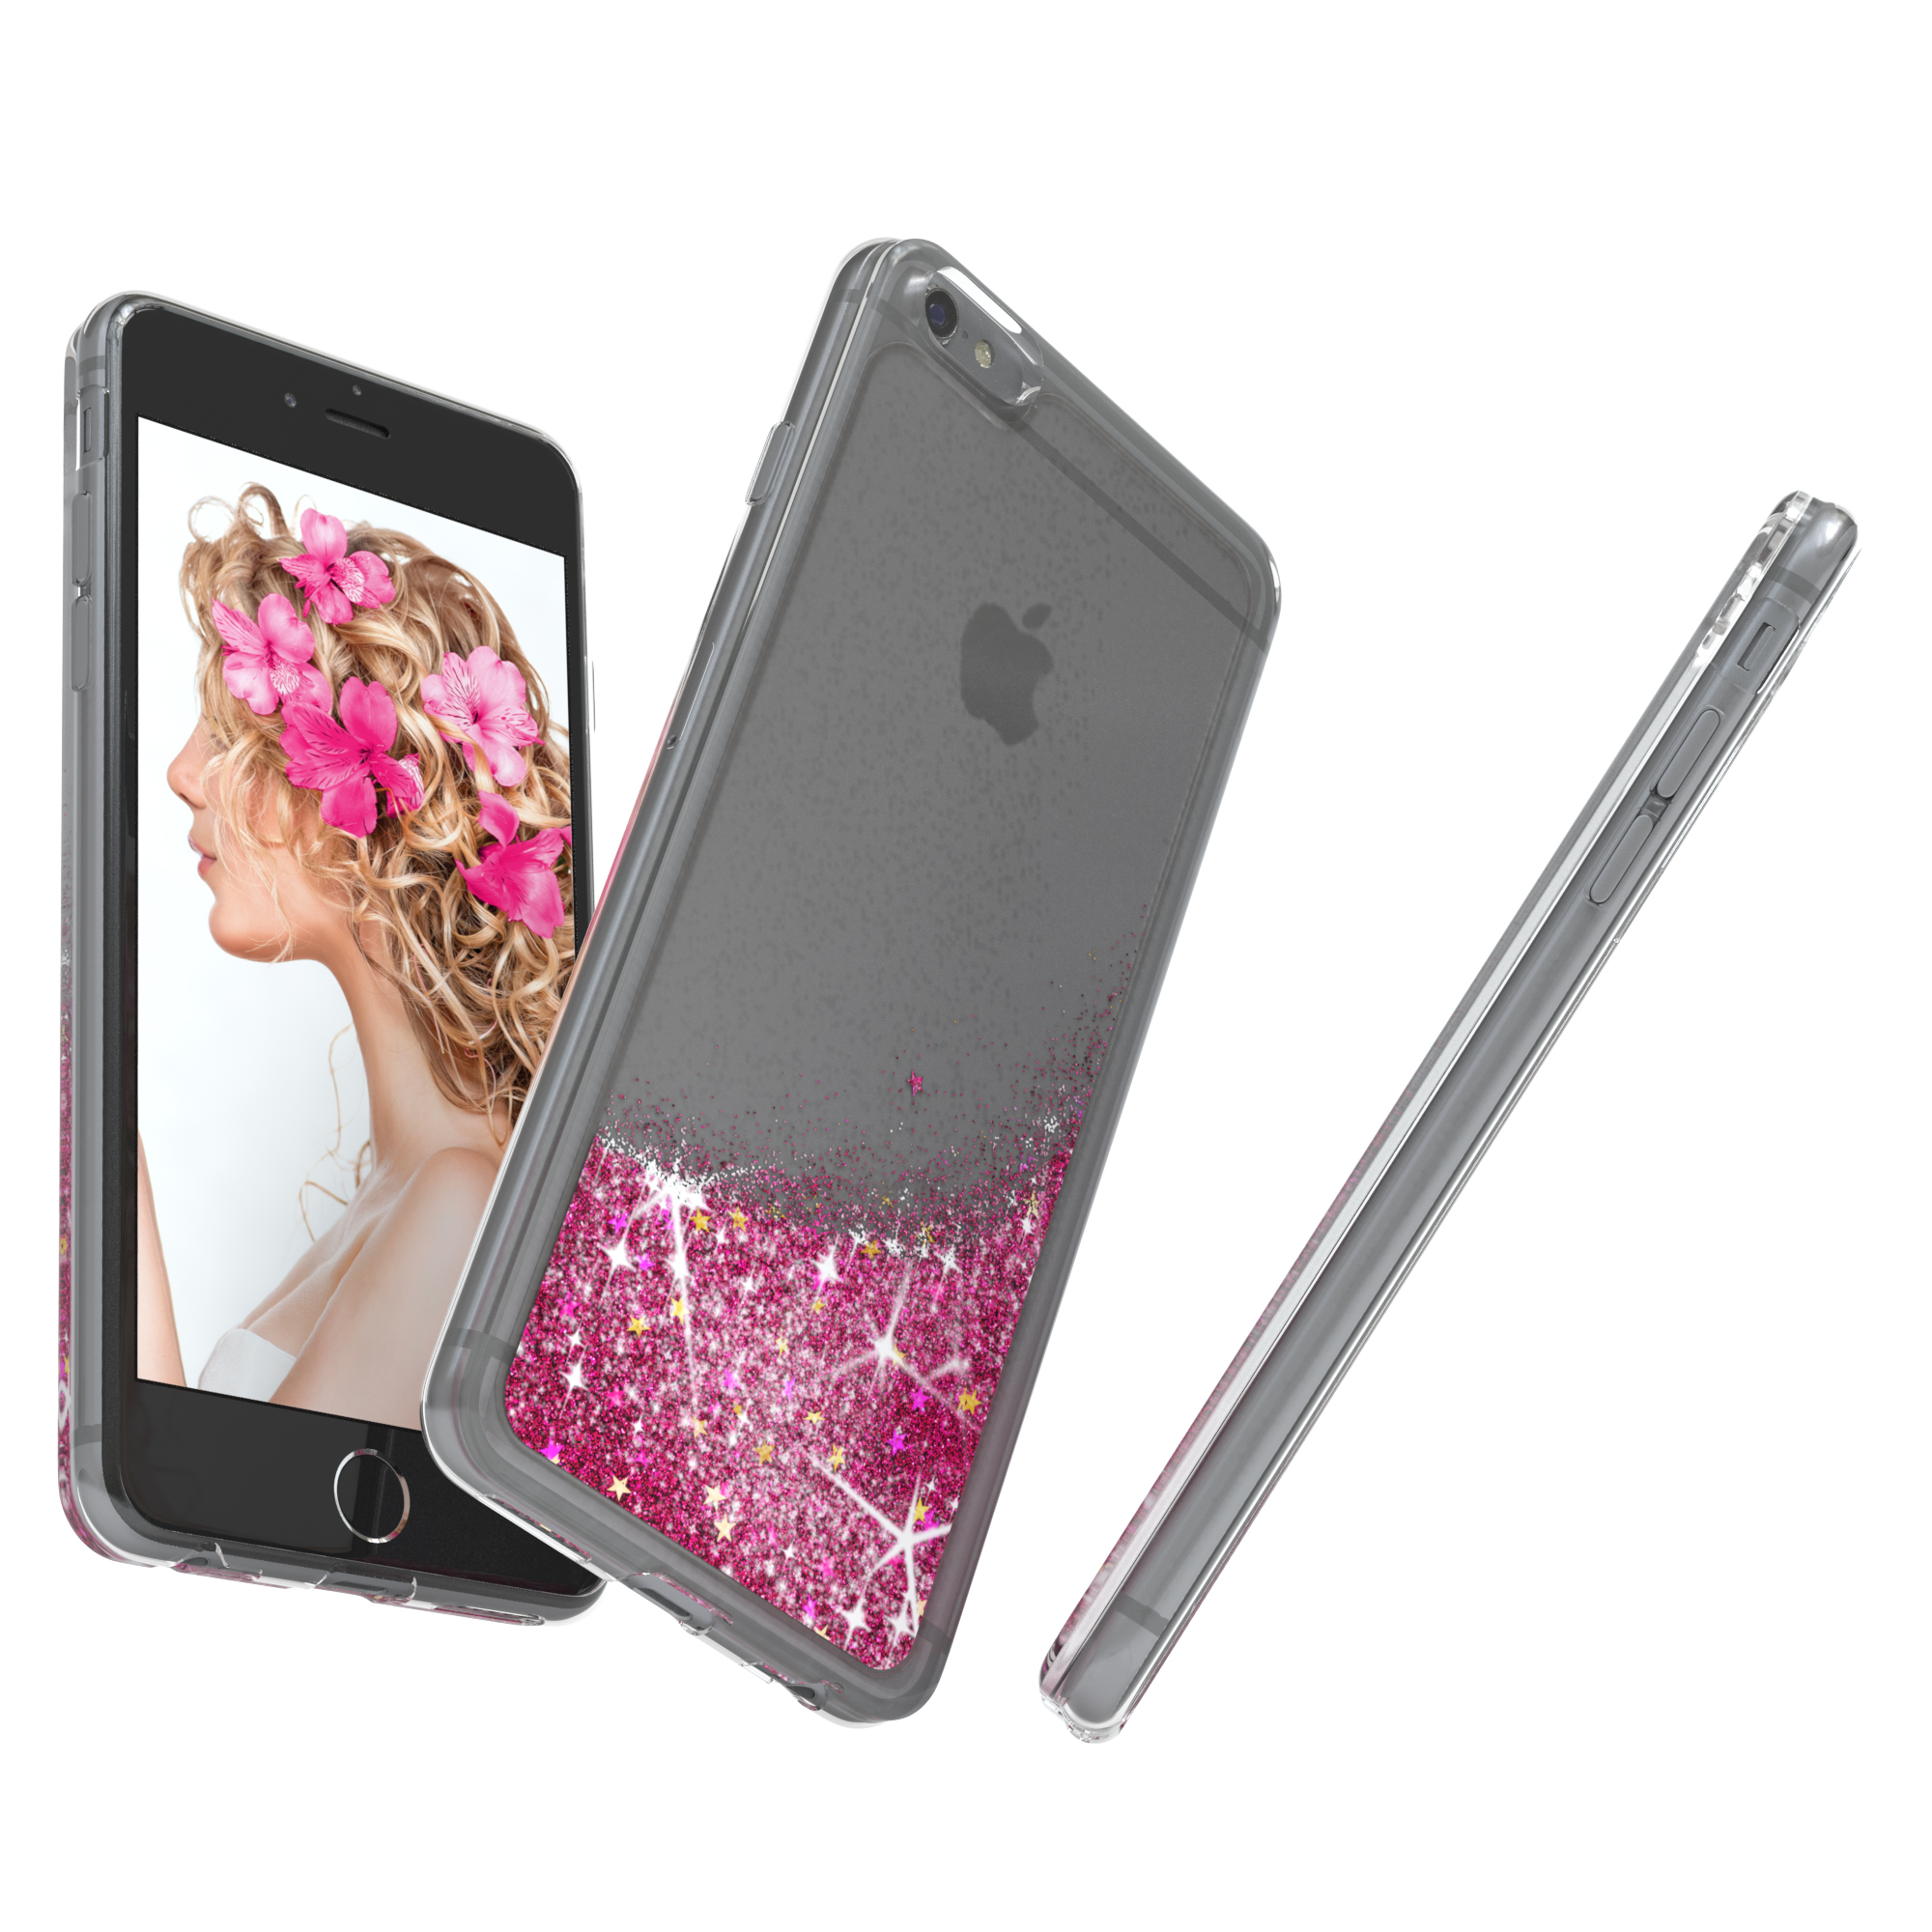 EAZY CASE Flüssig, 6 Apple, iPhone Backcover, Pink / Glitzerhülle 6S